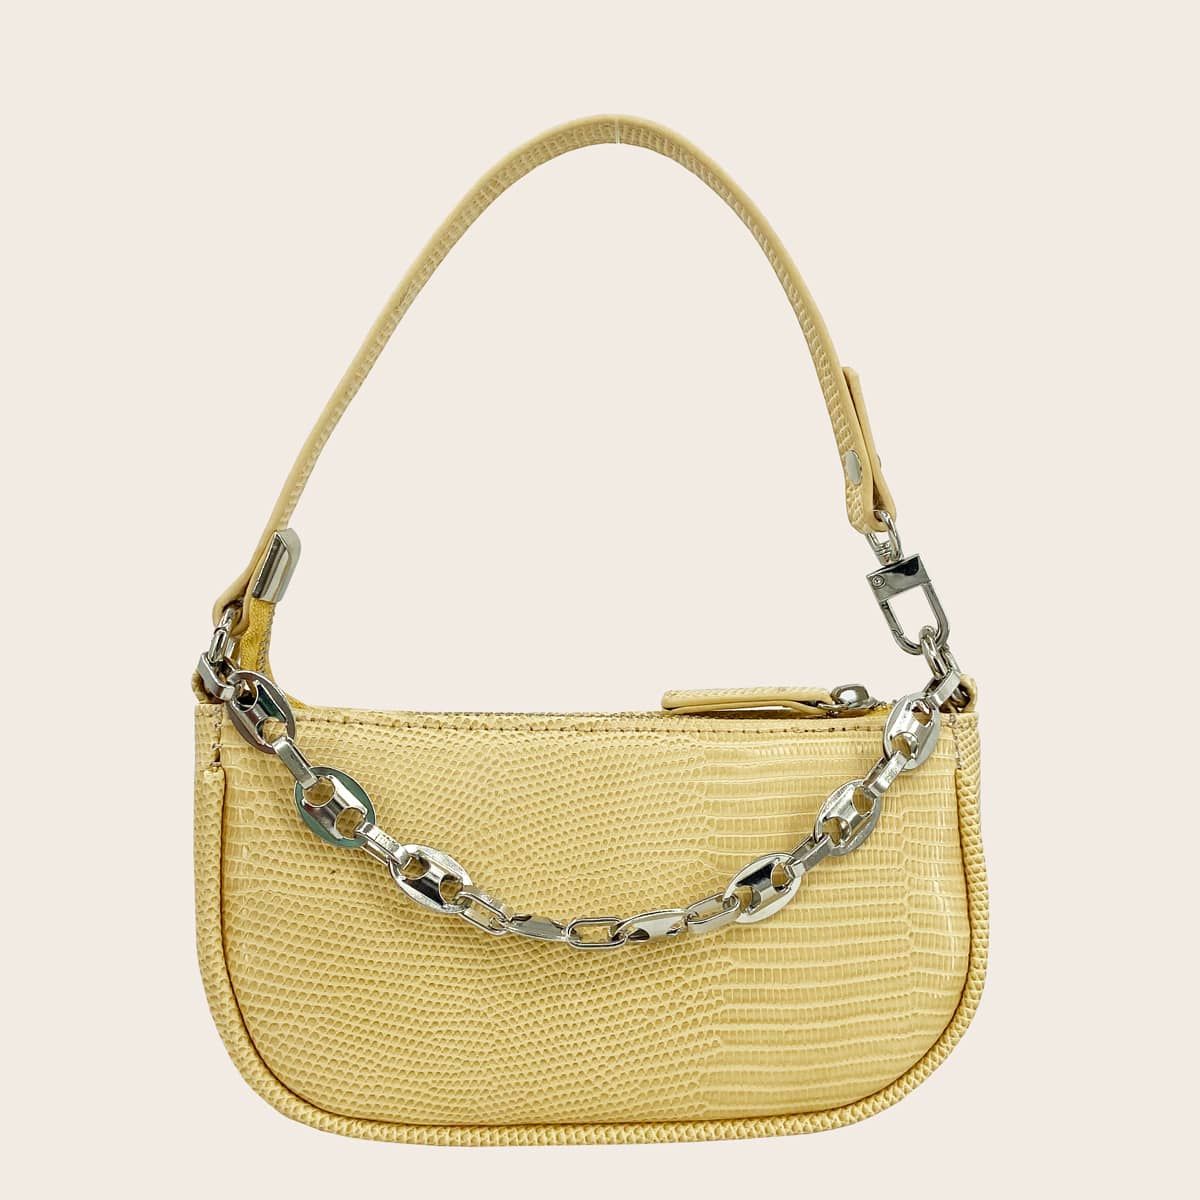 Snakeskin Shoulder Bag With Chain Handle | SHEIN